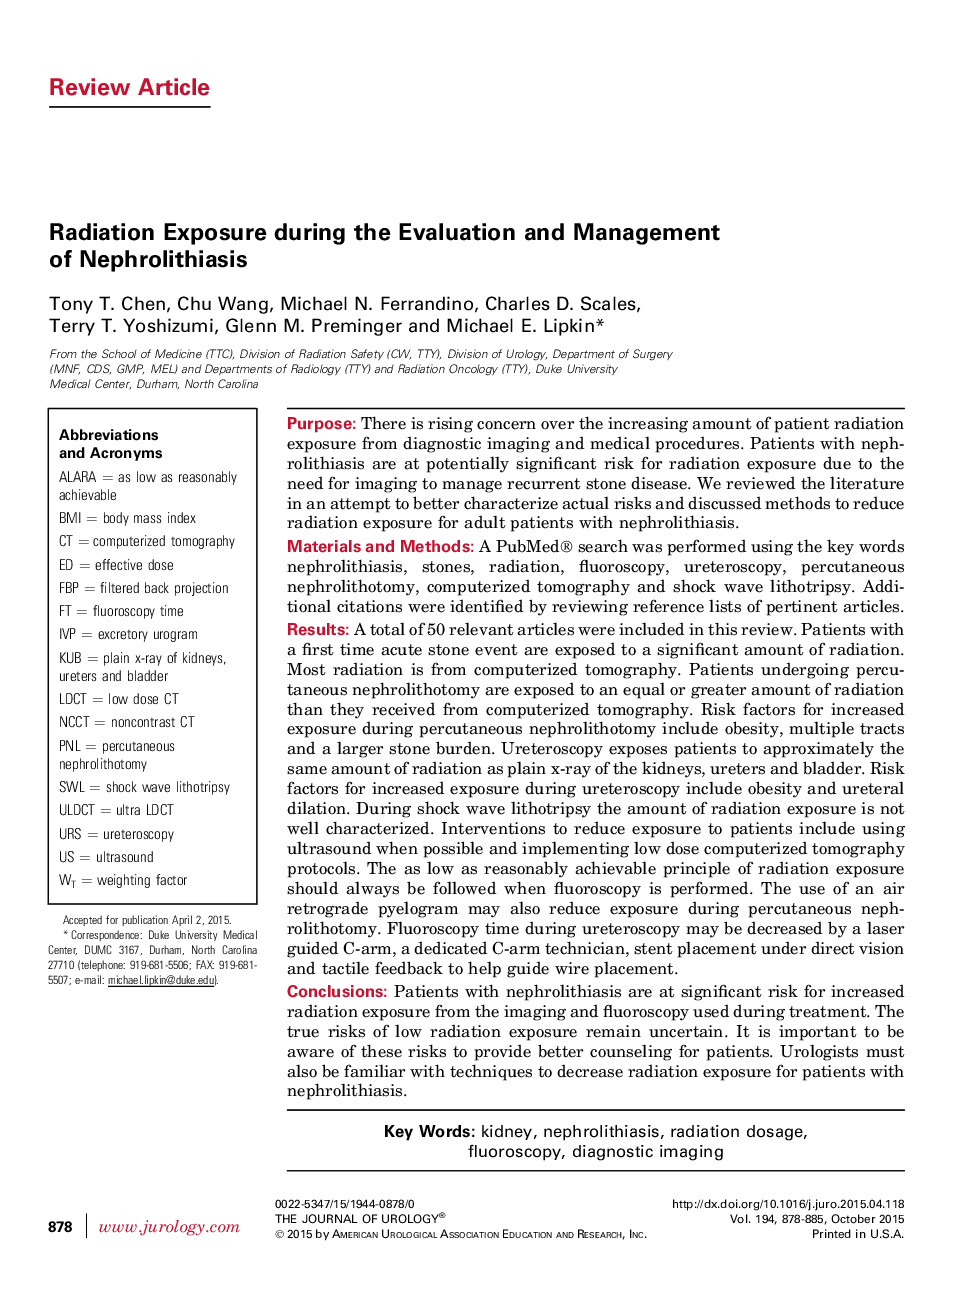 Radiation Exposure during the Evaluation and Management of Nephrolithiasis